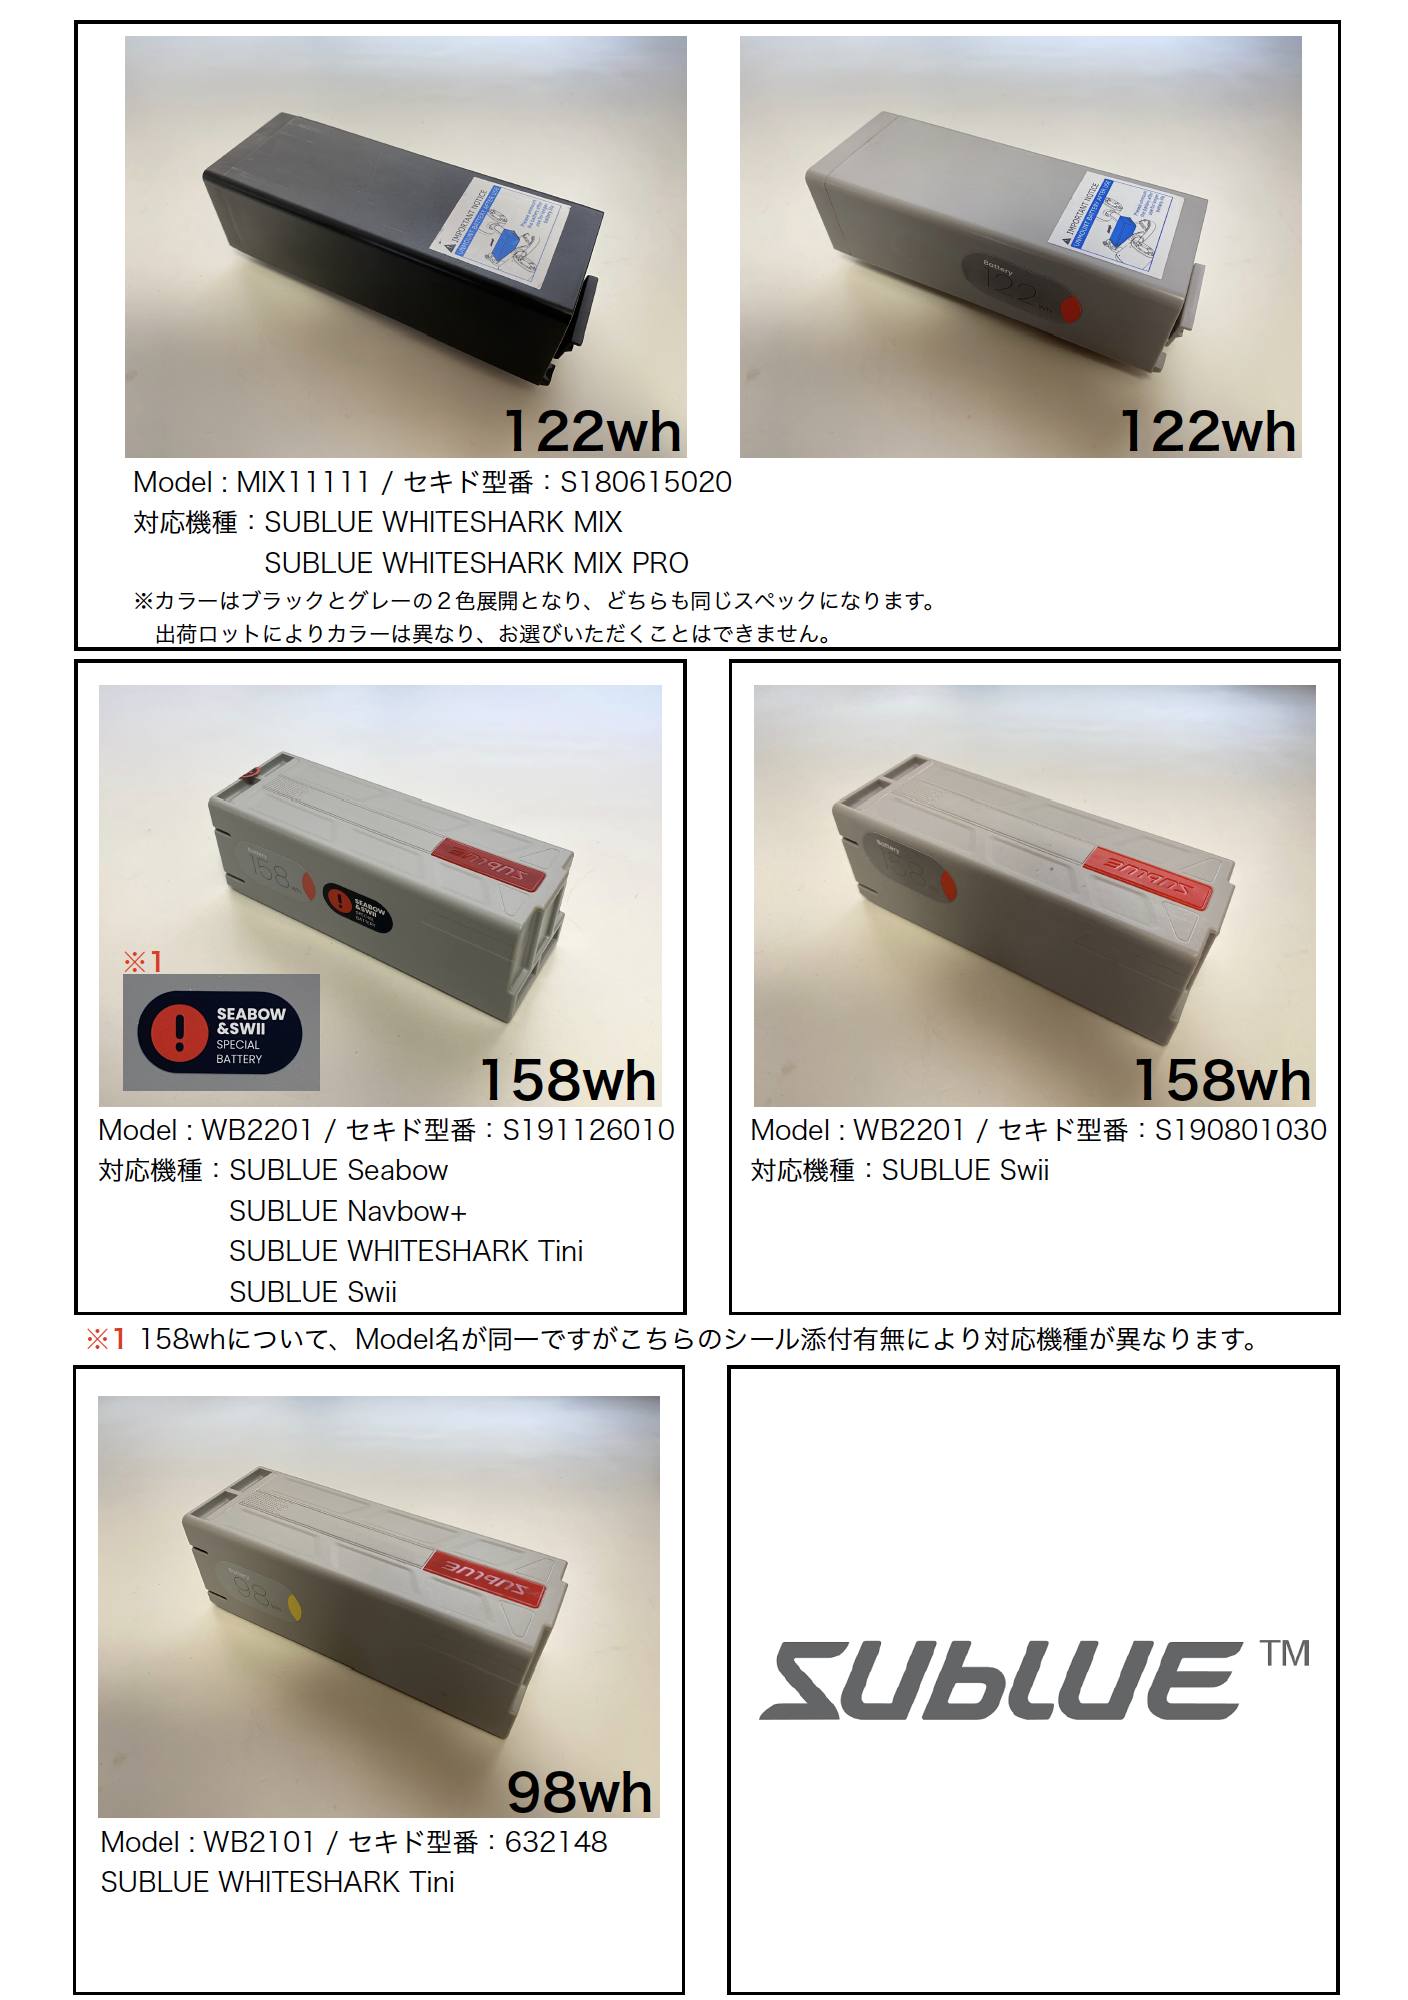 SUBLUE Swii (スウィー) 専用バッテリー 158Wh (カラー共通)